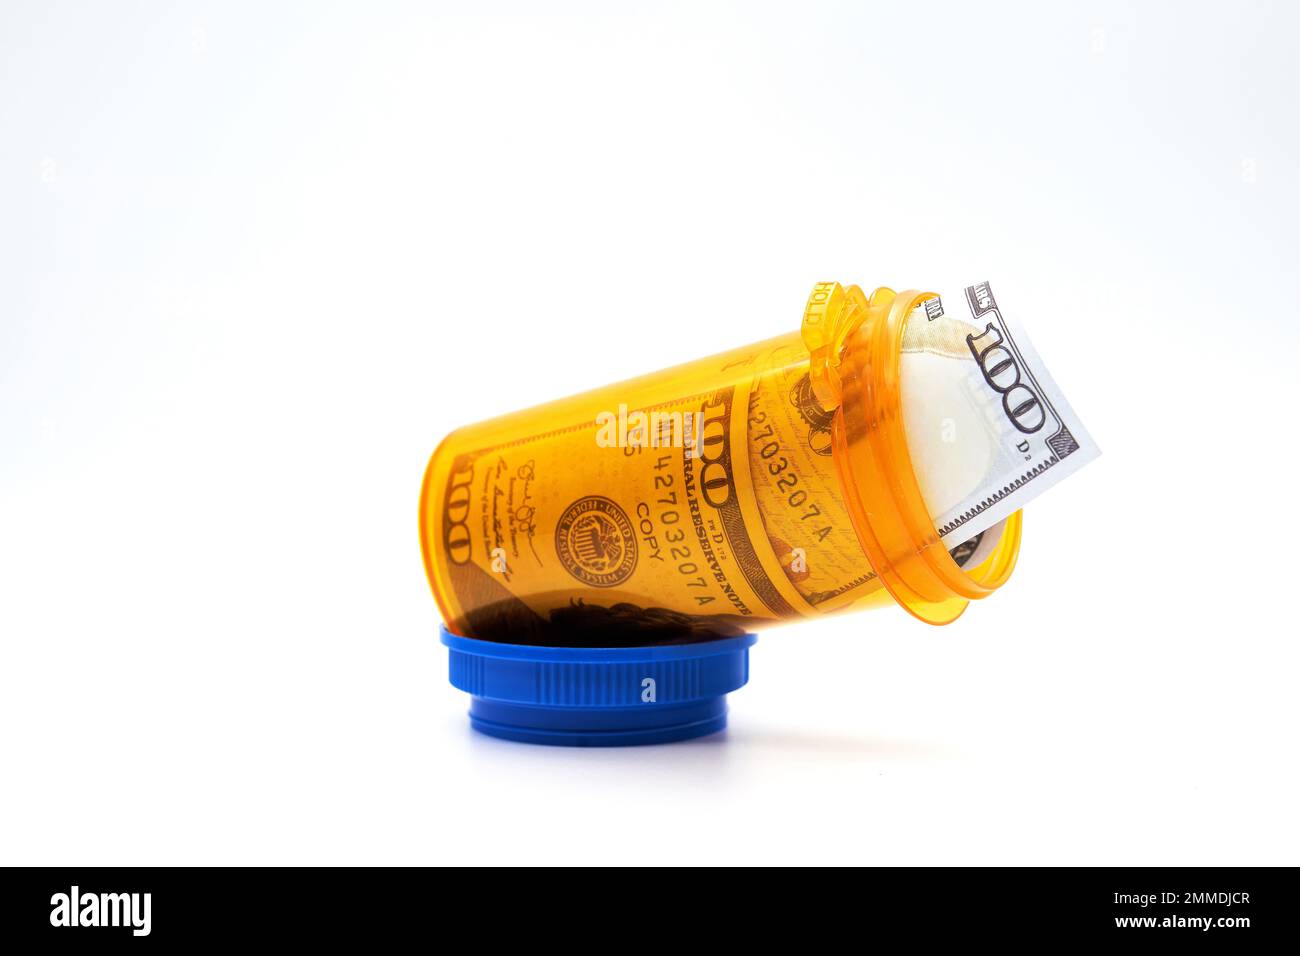 Child Proof Pill Container Abstract Stock Photo - Download Image Now -  Prescription, Prescription Medicine, Child Proof - iStock